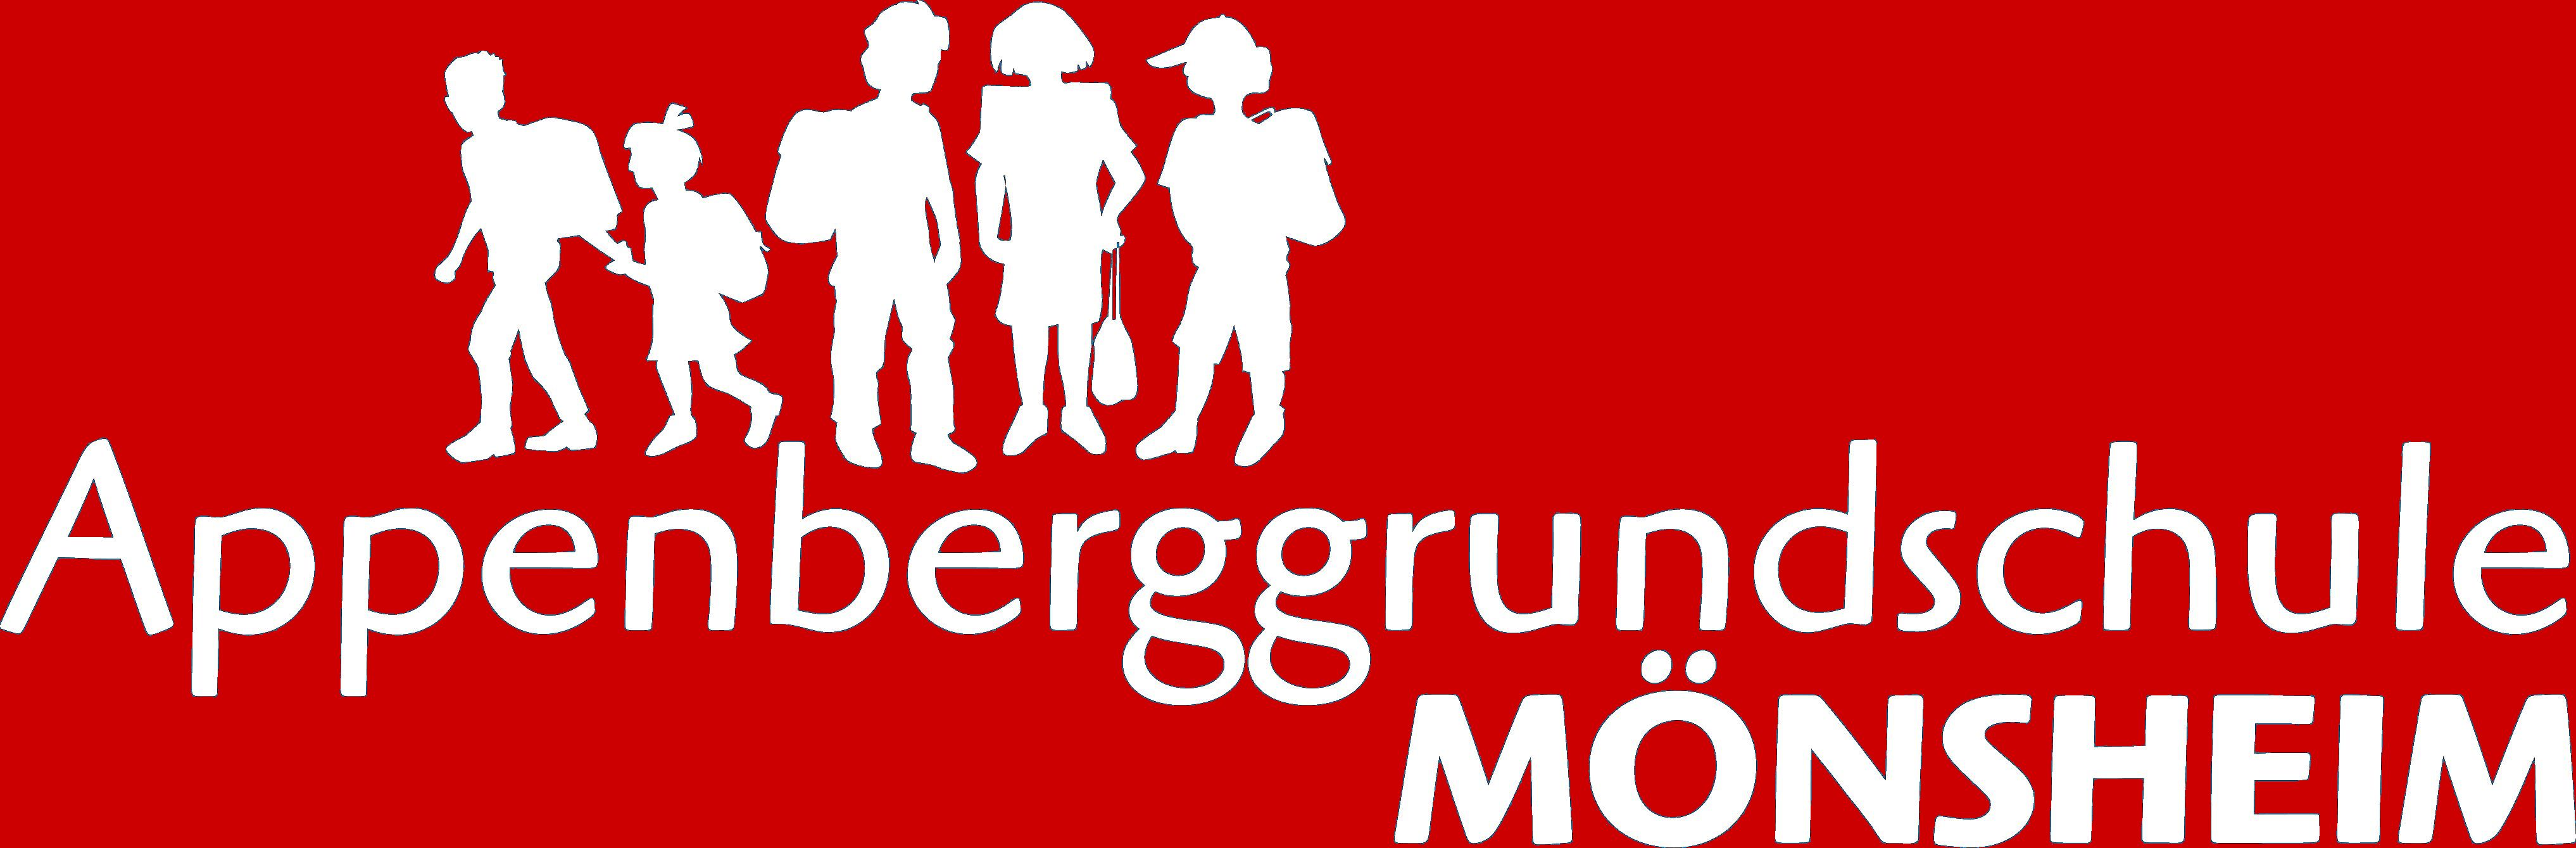 Appenberggrundschule Mönsheim